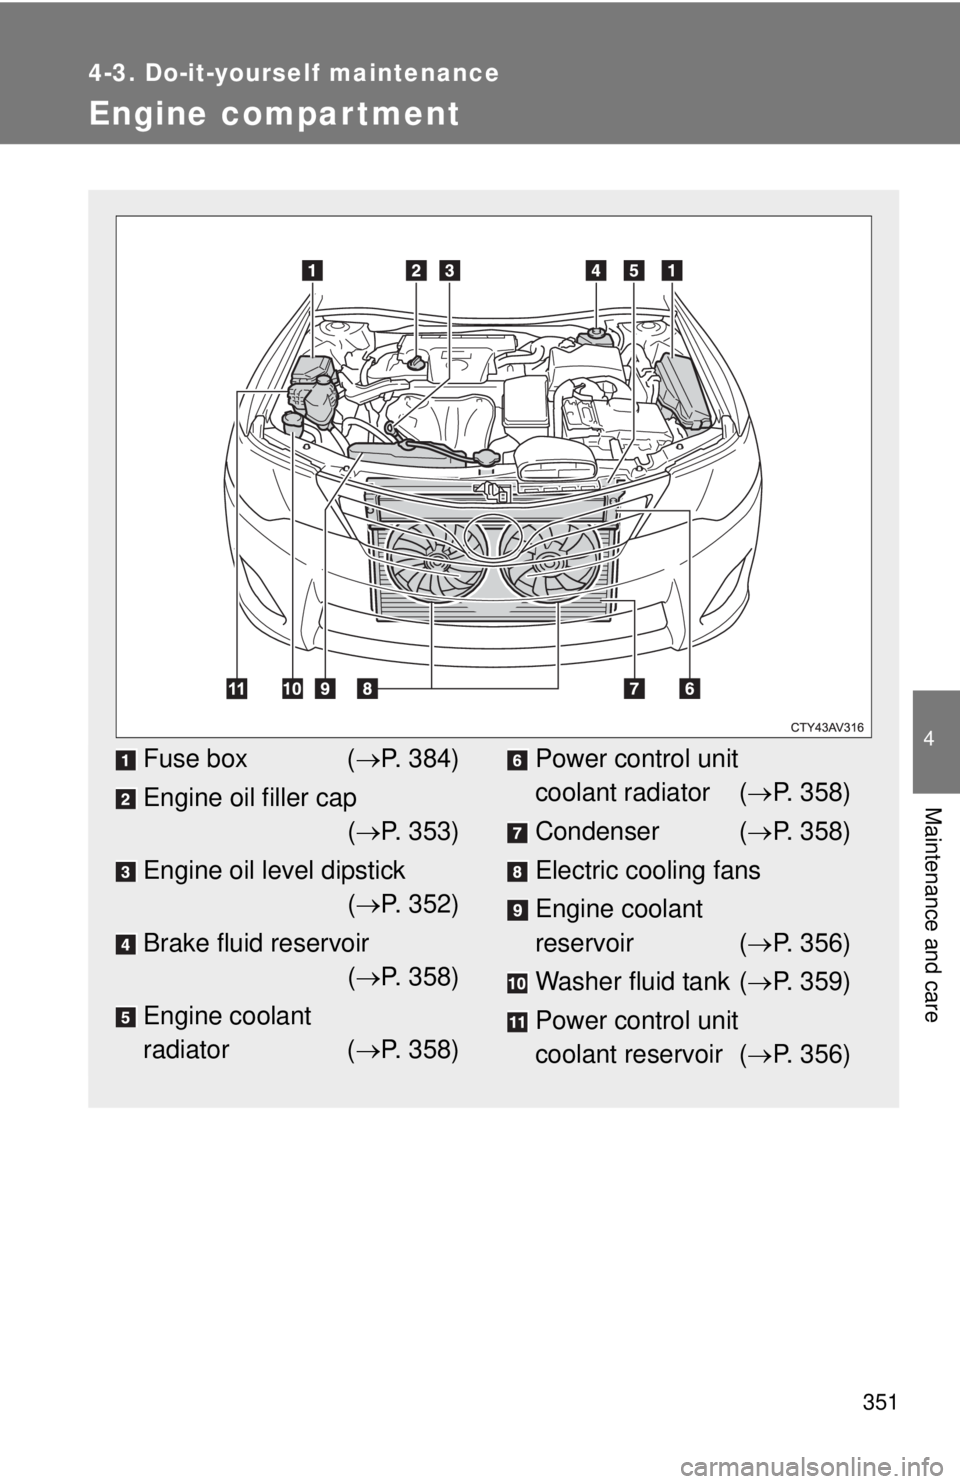 TOYOTA CAMRY HV 2012  Owners Manual 351
4-3. Do-it-yourself maintenance
4
Maintenance and care
Engine compar tment
Fuse box (P. 384)
Engine oil filler cap ( P. 353)
Engine oil level dipstick ( P. 352)
Brake fluid reservoir (